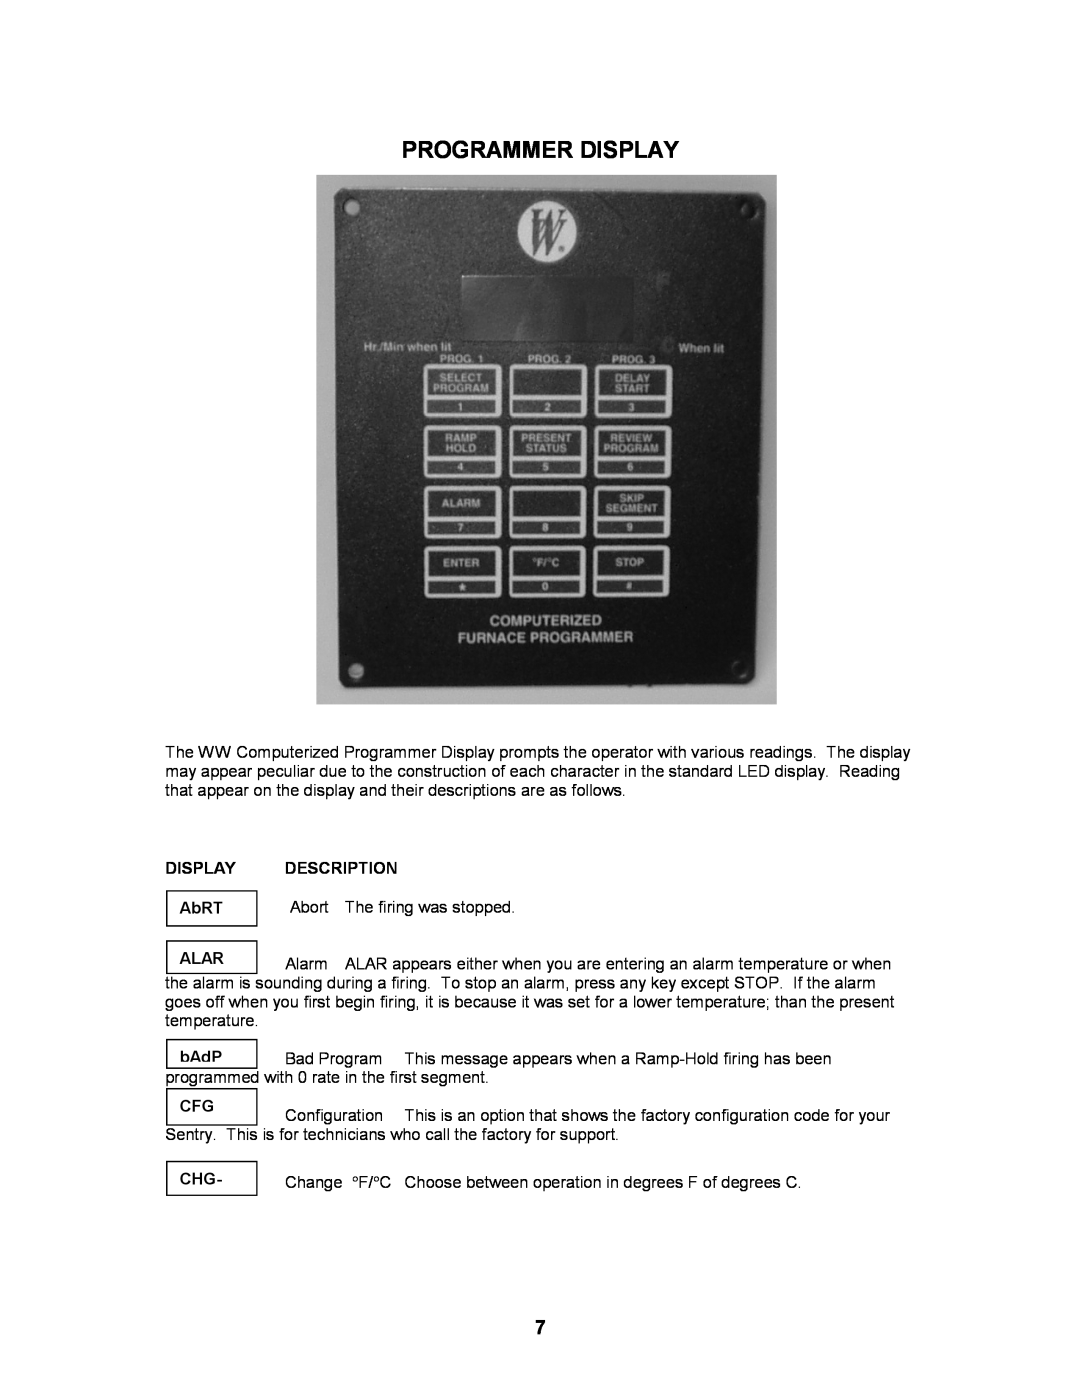 Paragon W18, WTNFII-19, W14, W13, WTNFII-10 manual Programmer Display, DISPLAY AbRT, Description, Alar, bAdP 